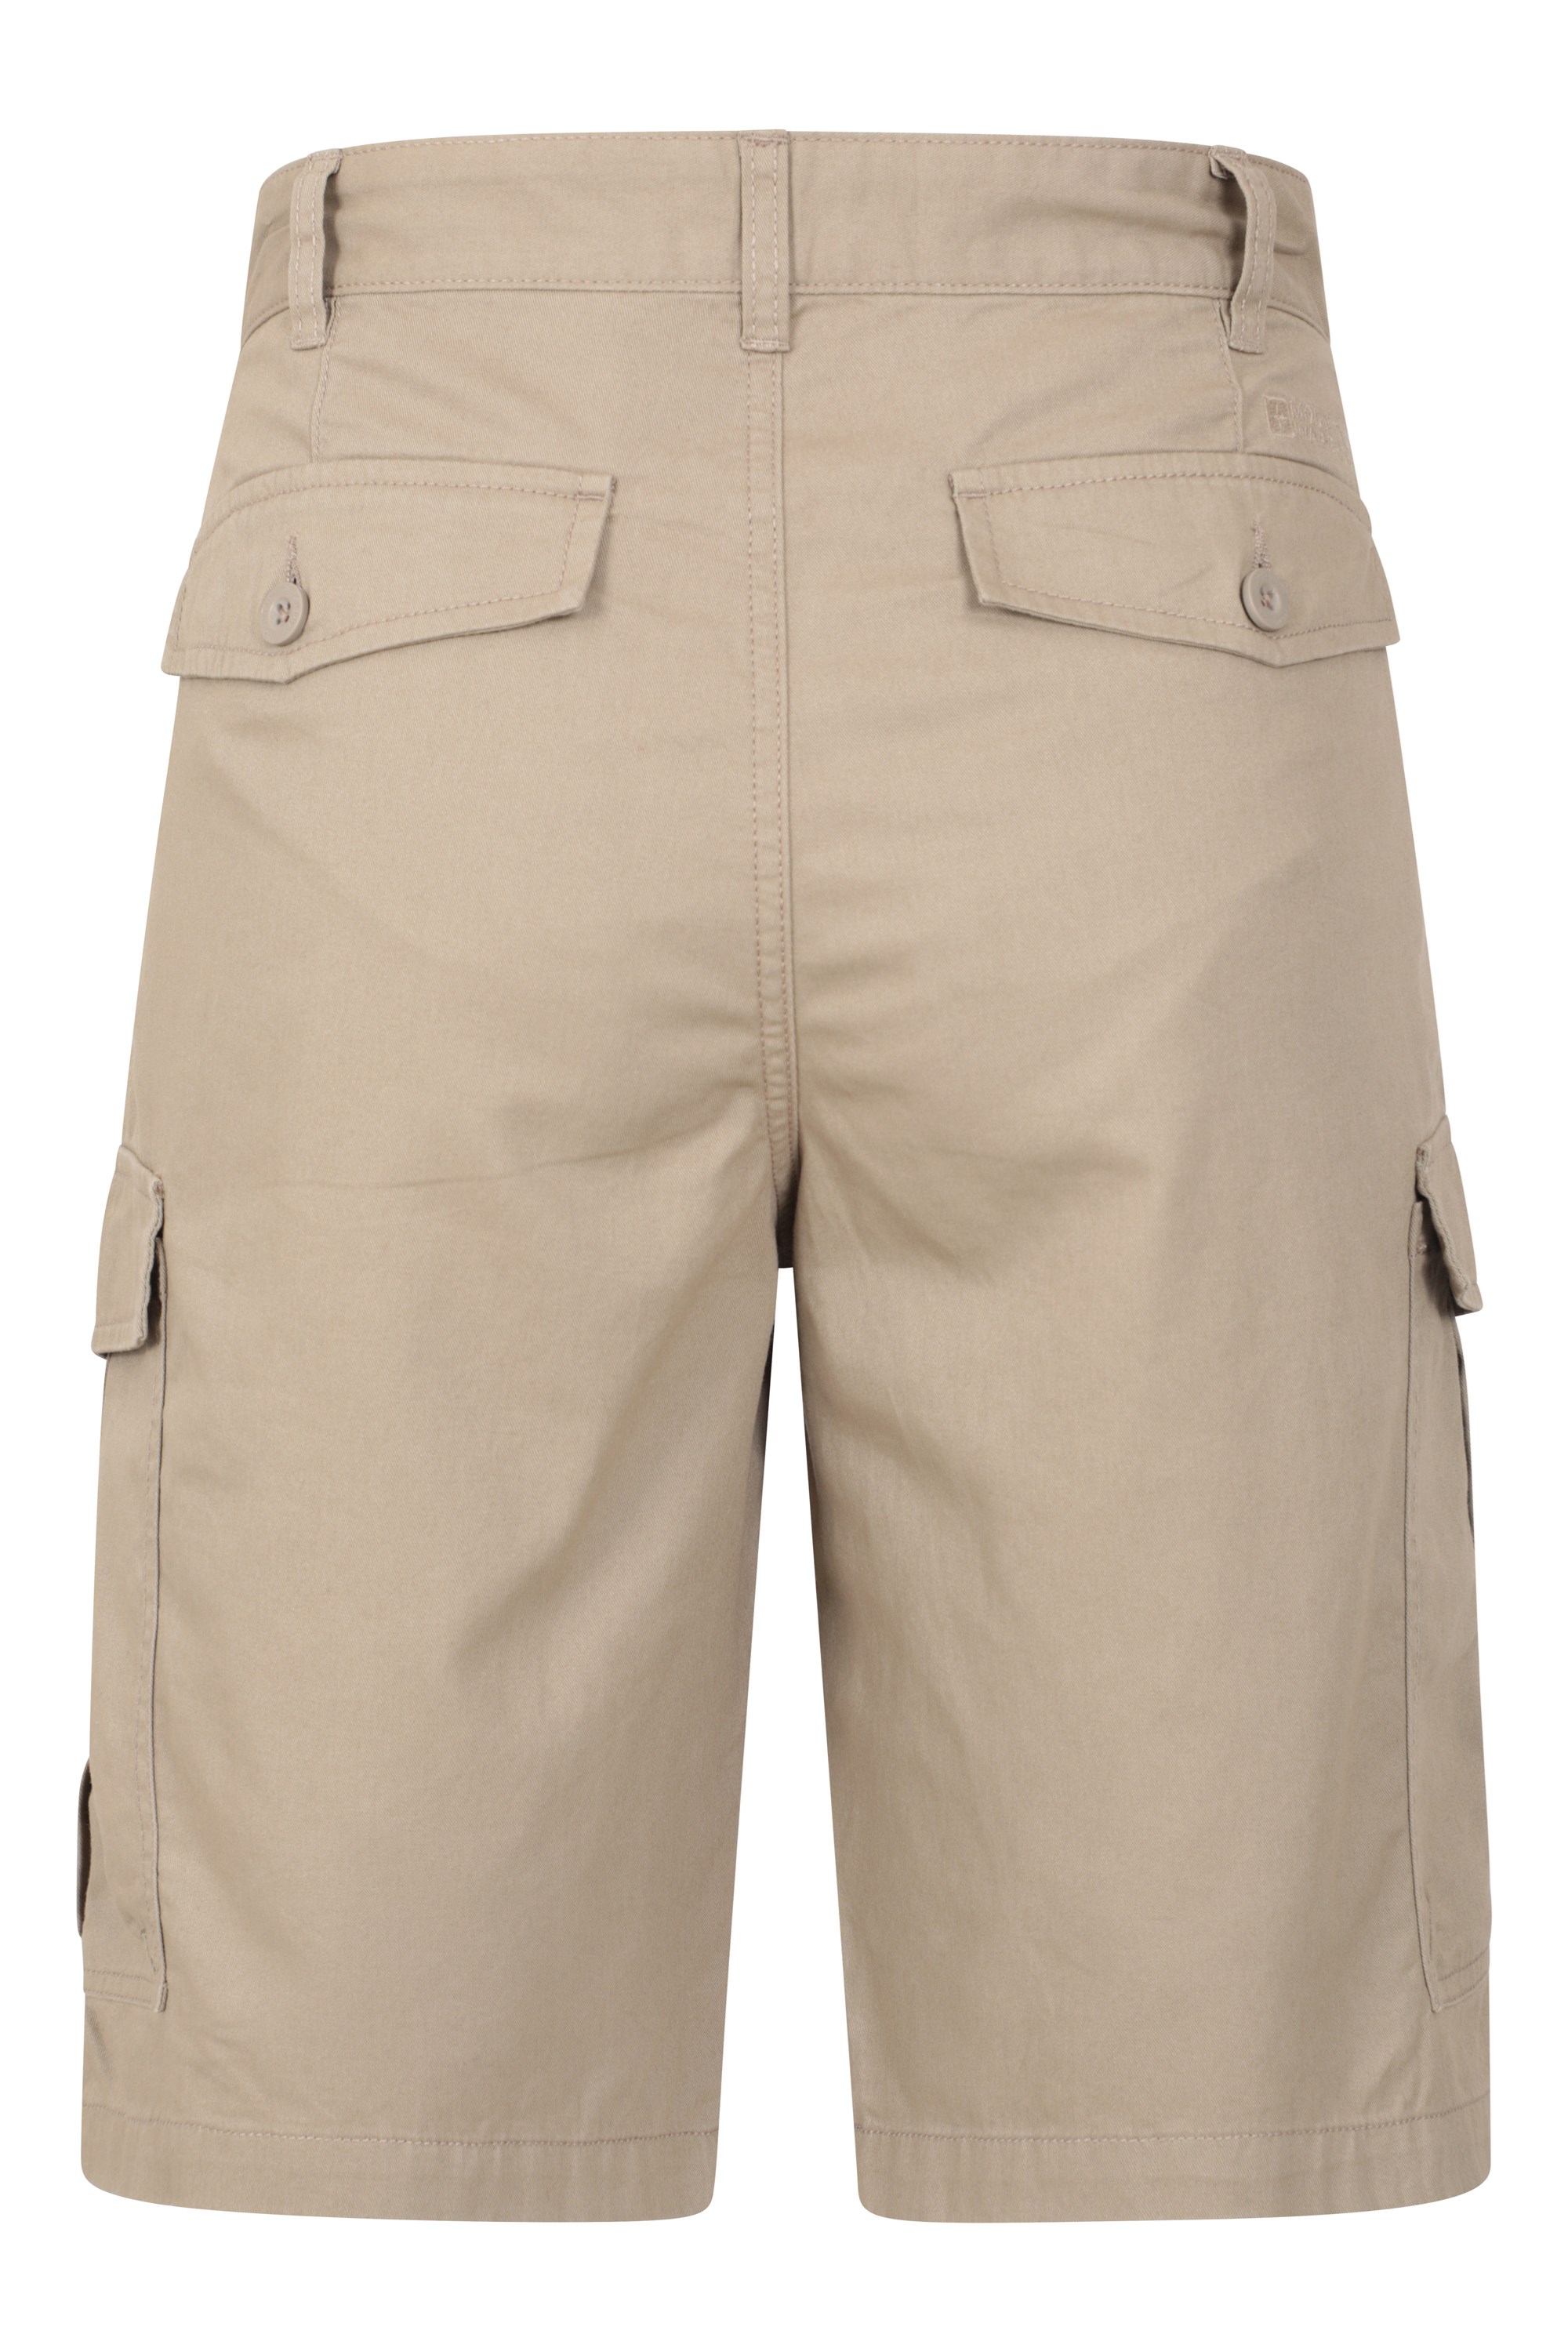 Mountain Warehouse Men Lakeside Cargo Short Trouser Trousers 